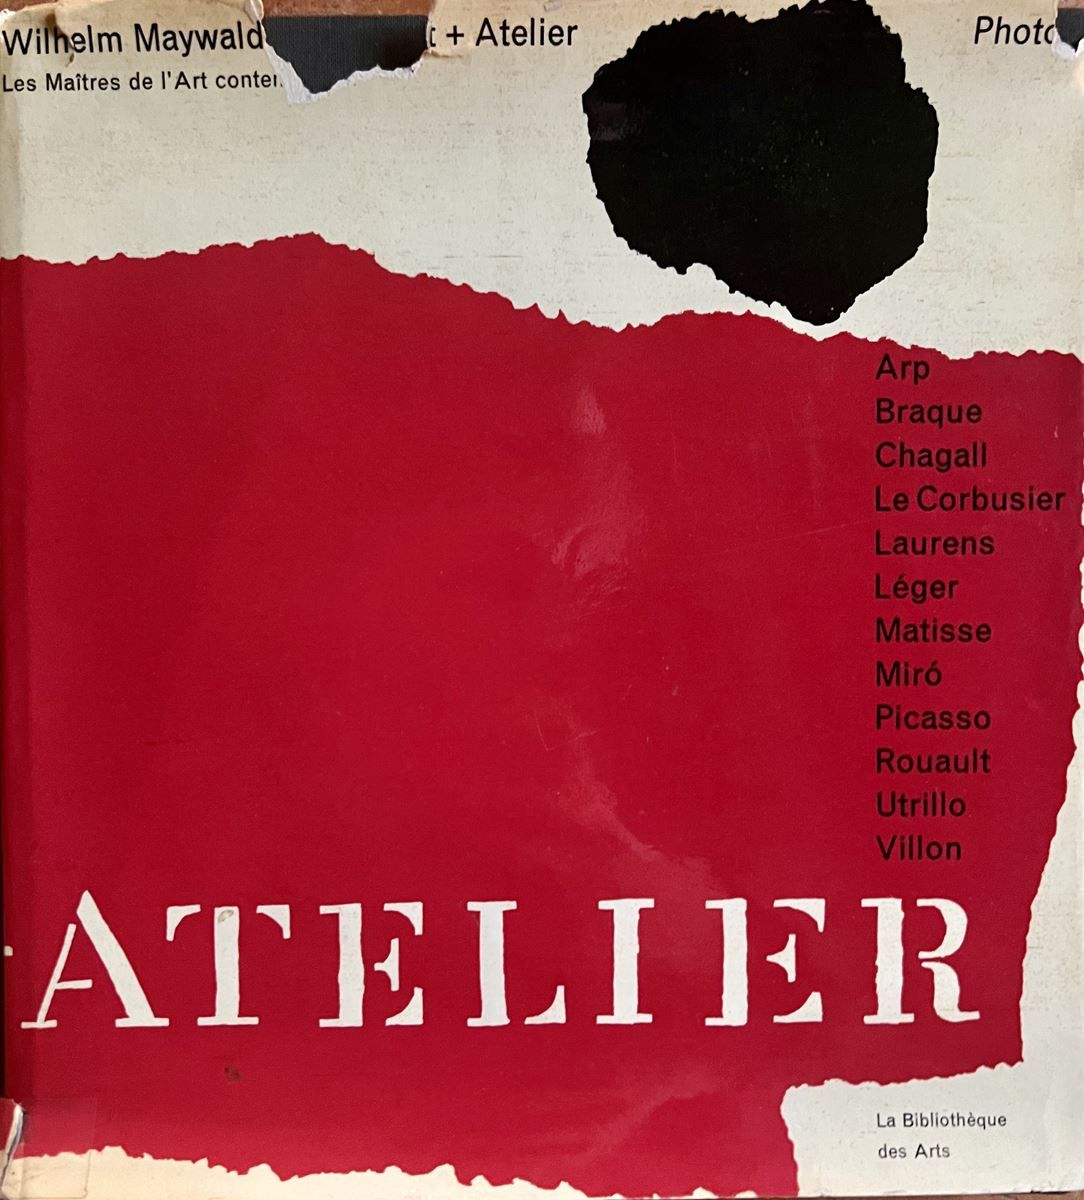 Null 威廉-梅瓦尔德肖像+工作室。阿尔普、夏加尔、米罗、毕加索等。1960 年版 Bibliothèque des Arts。防尘套破损。